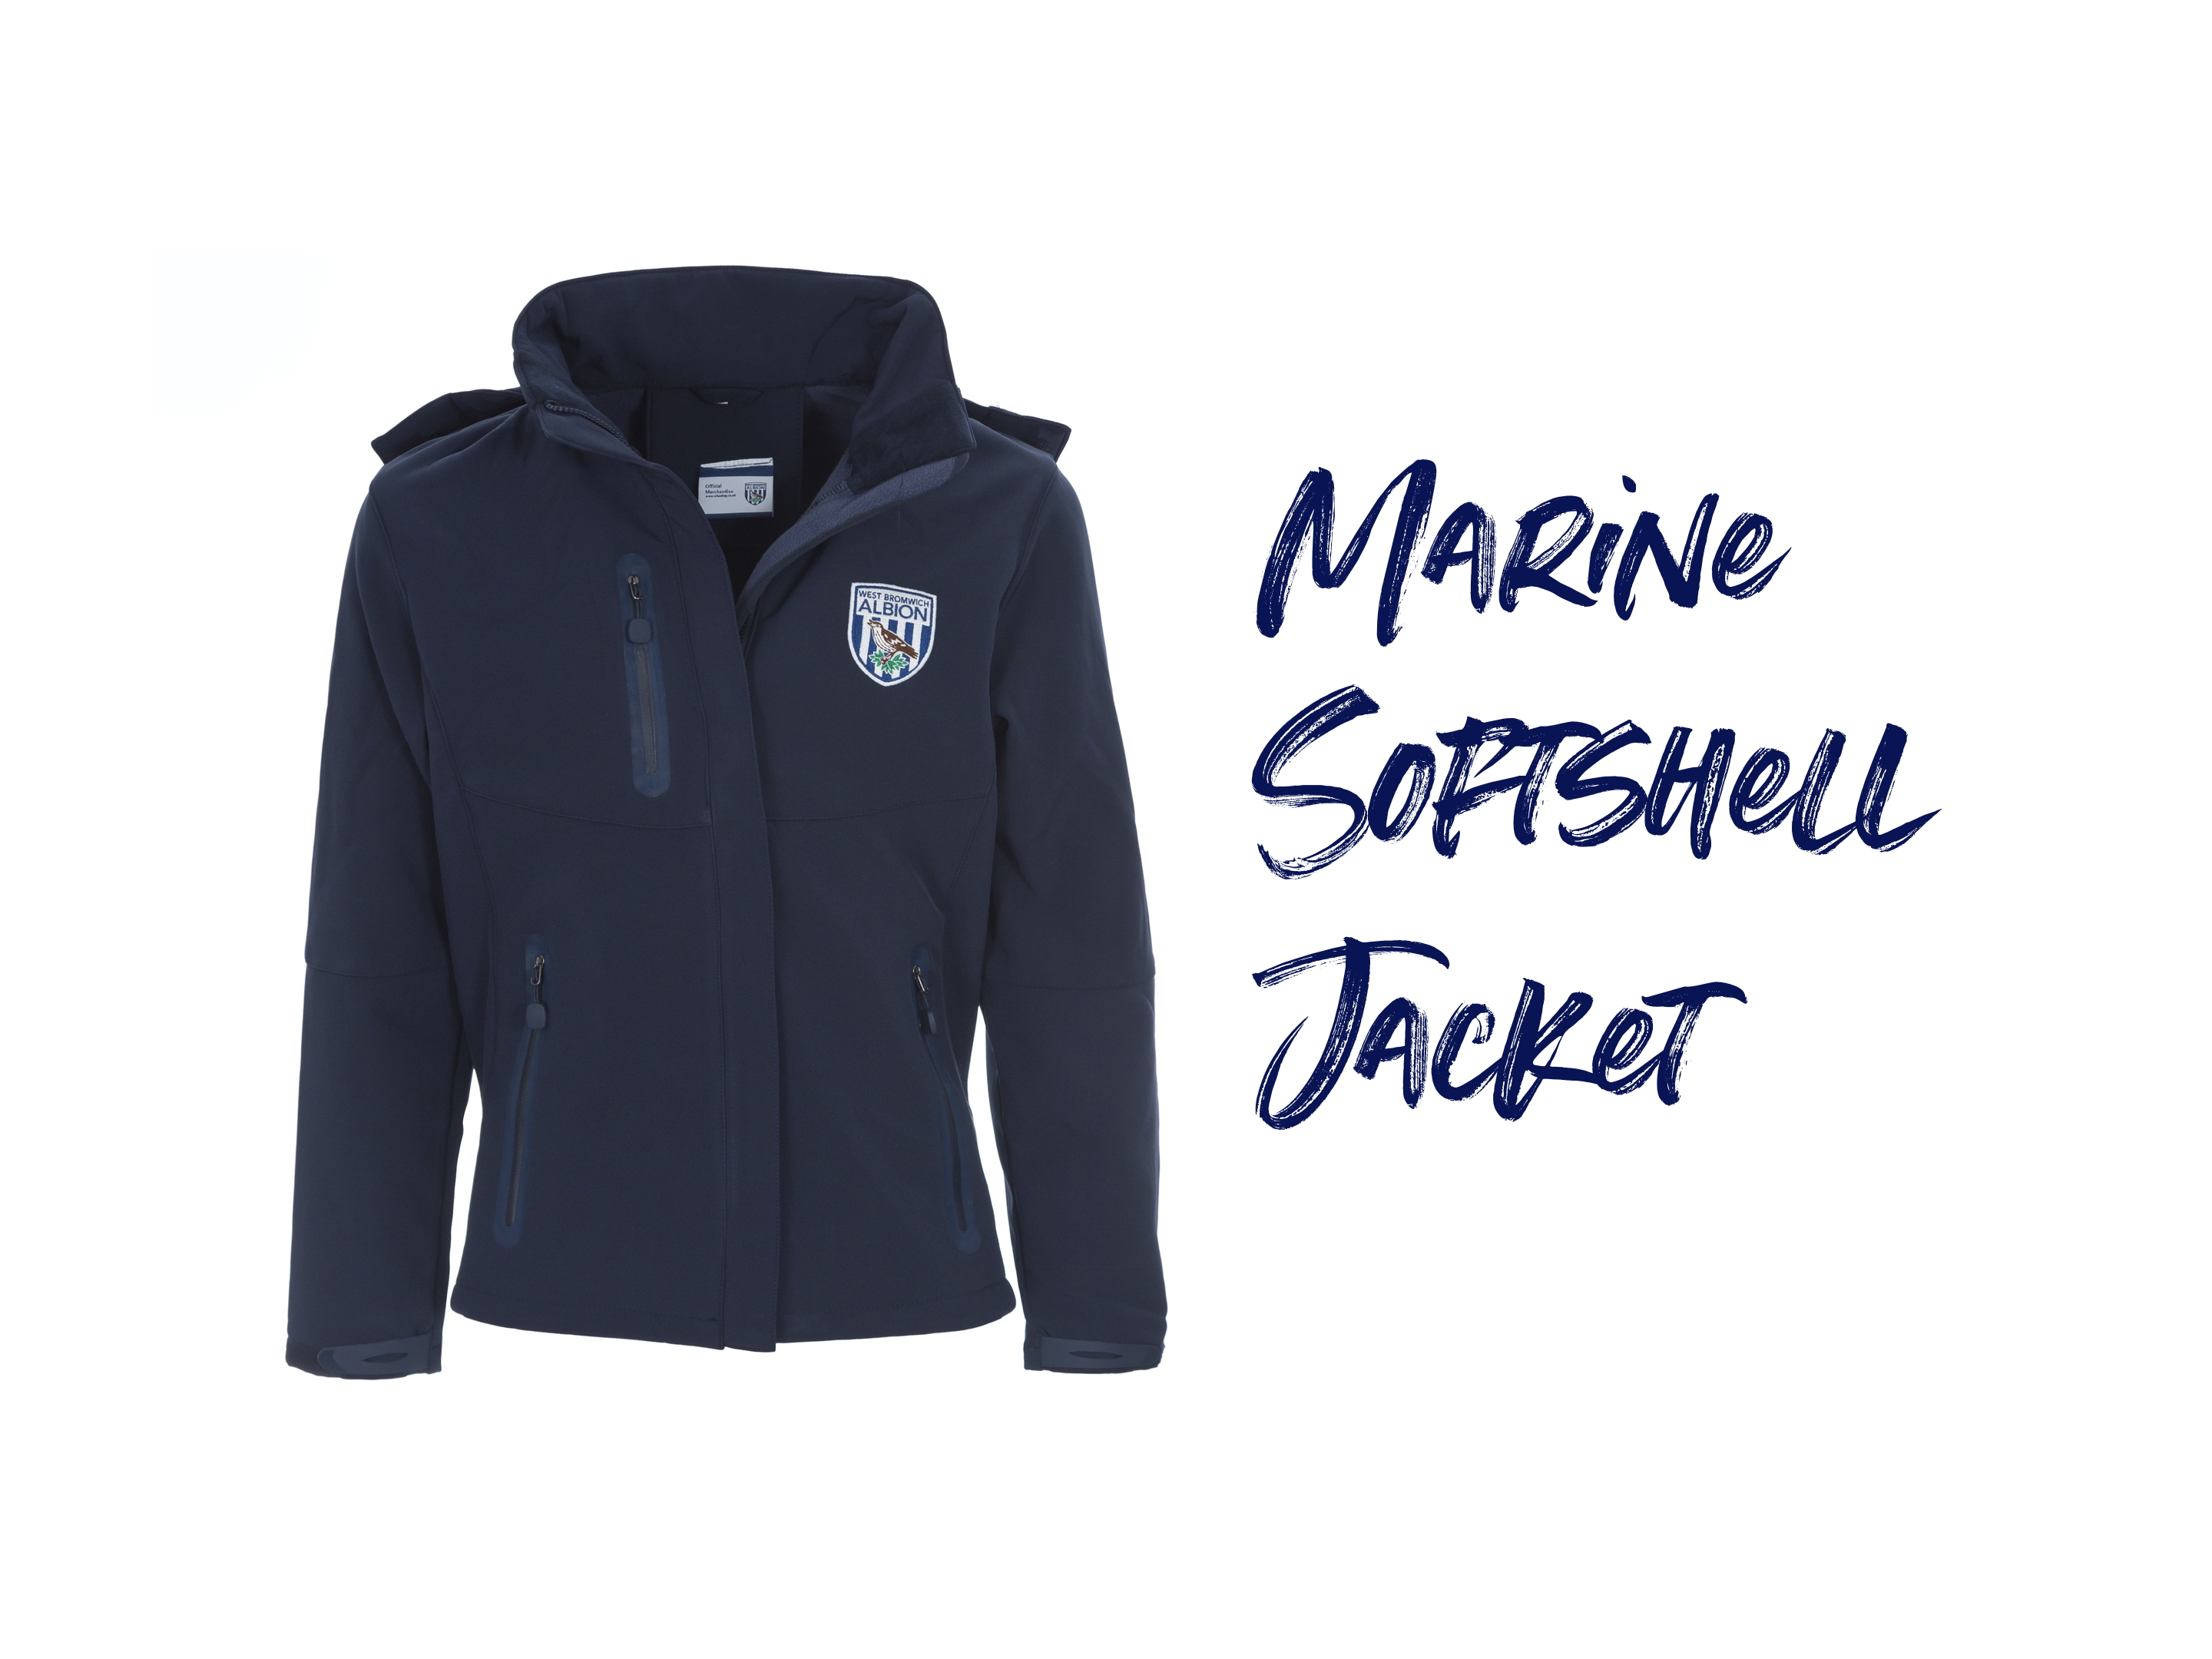 Marine Softshell Jacket